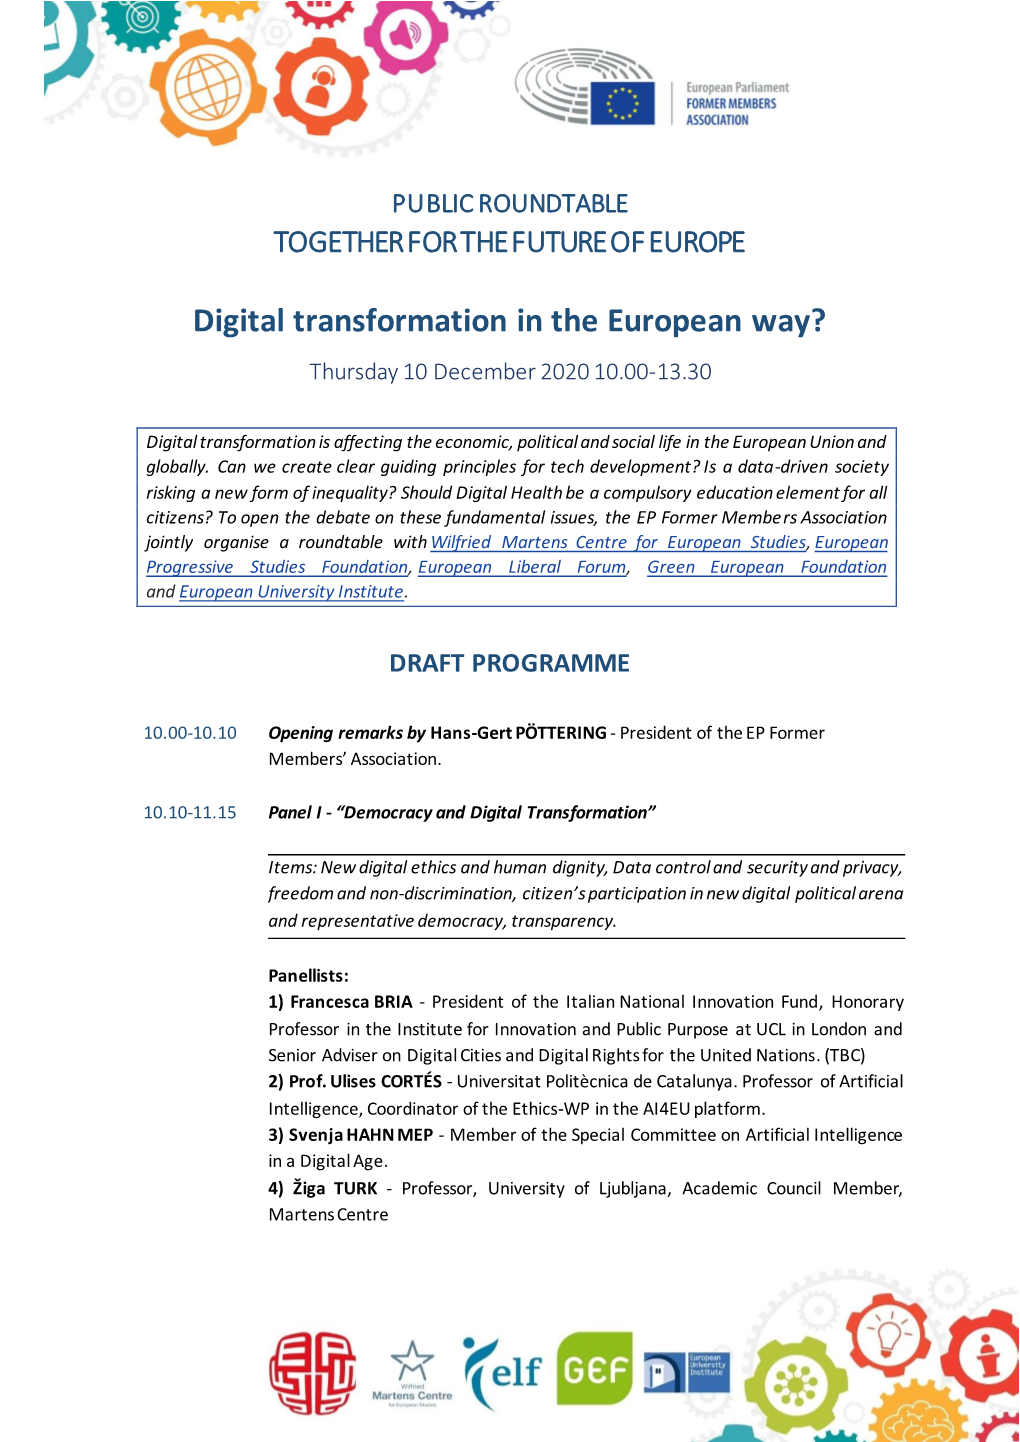 Digital Transformation in the European Way? Thursday 10 December 2020 10.00-13.30